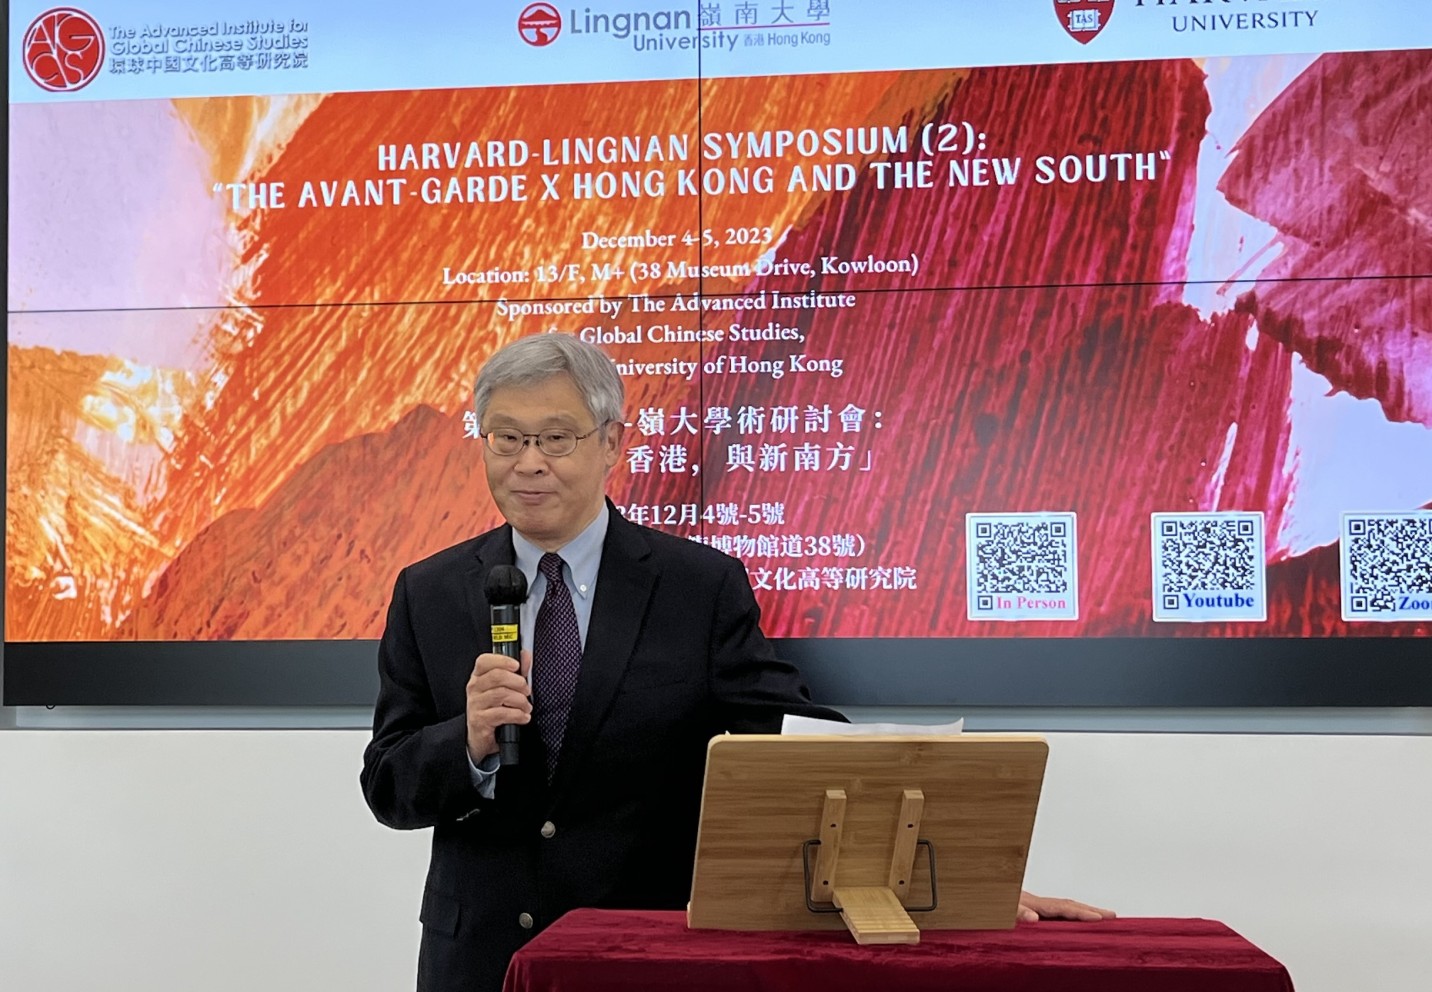 700 scholars and students join Harvard-Lingnan Symposium exploring contemporary Chinese literature from a Hong Kong perspective